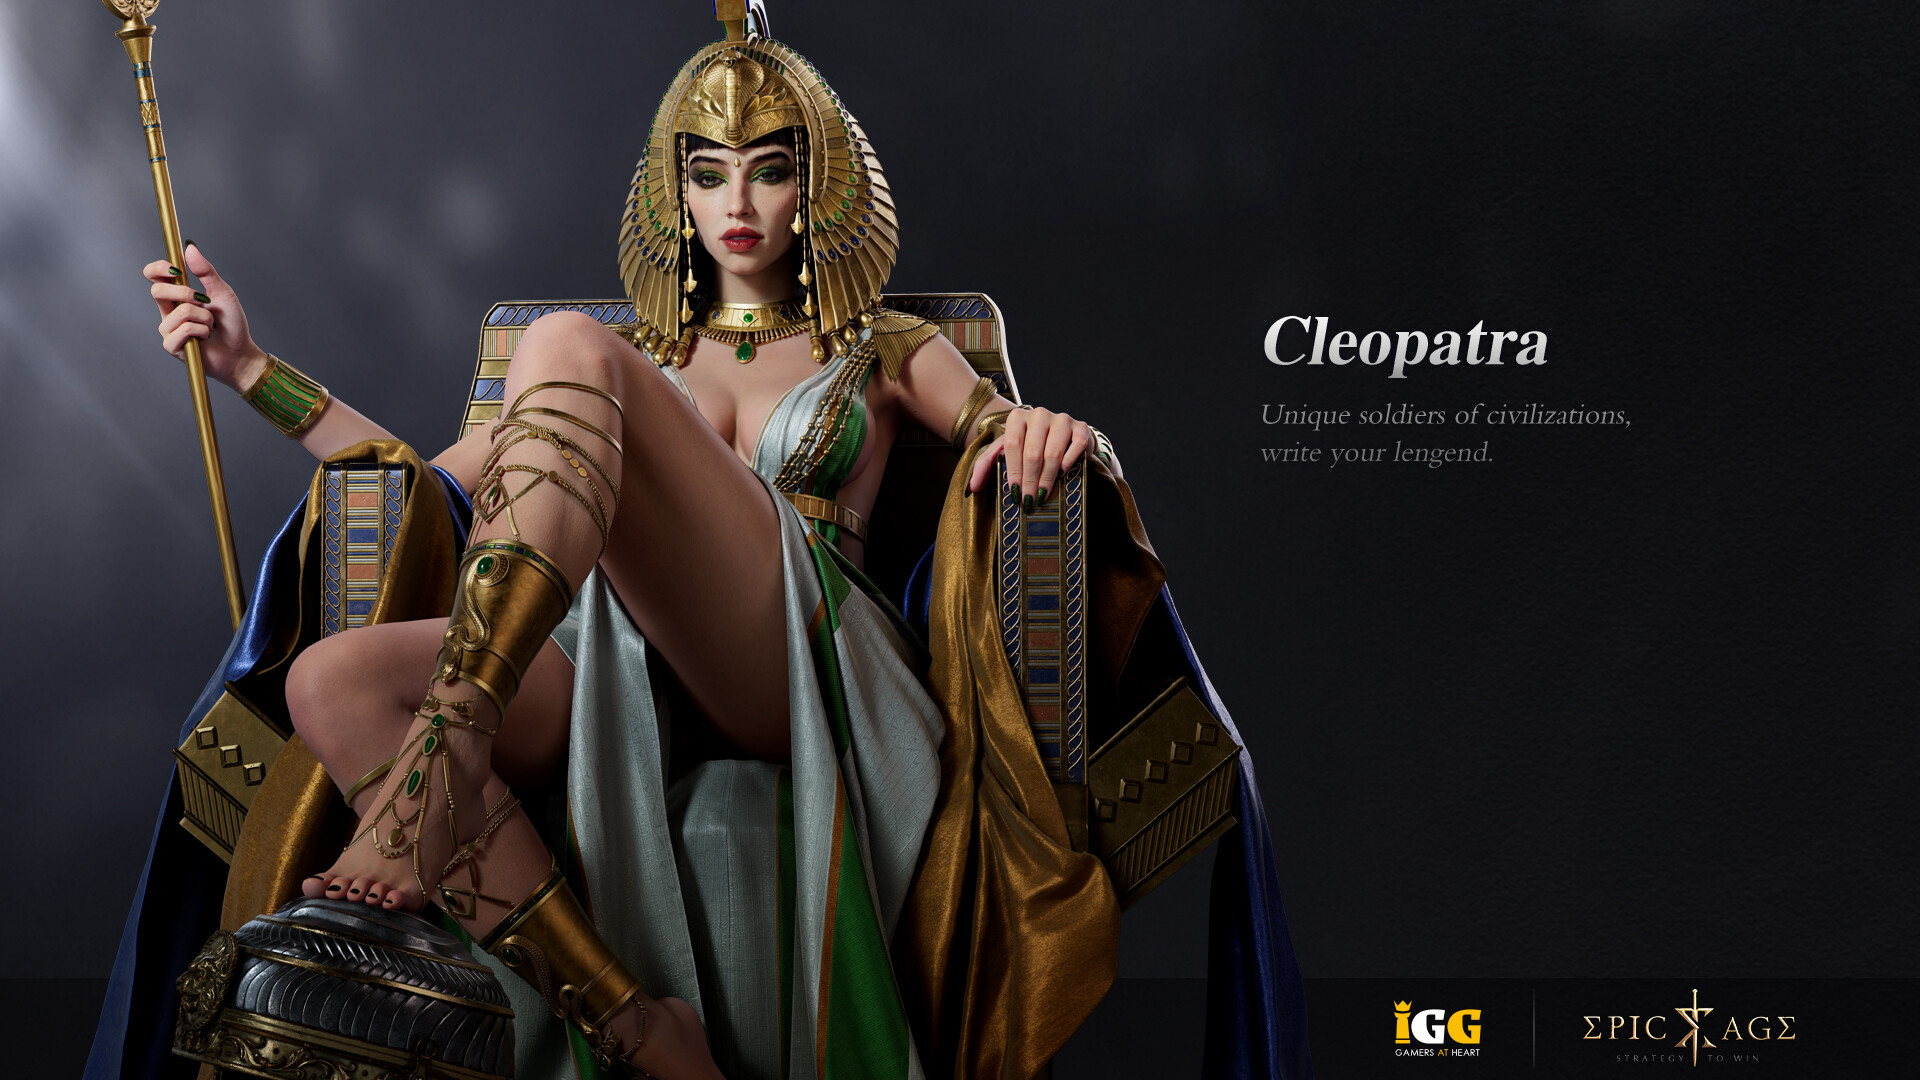 Dónde está la tumba de cleopatra